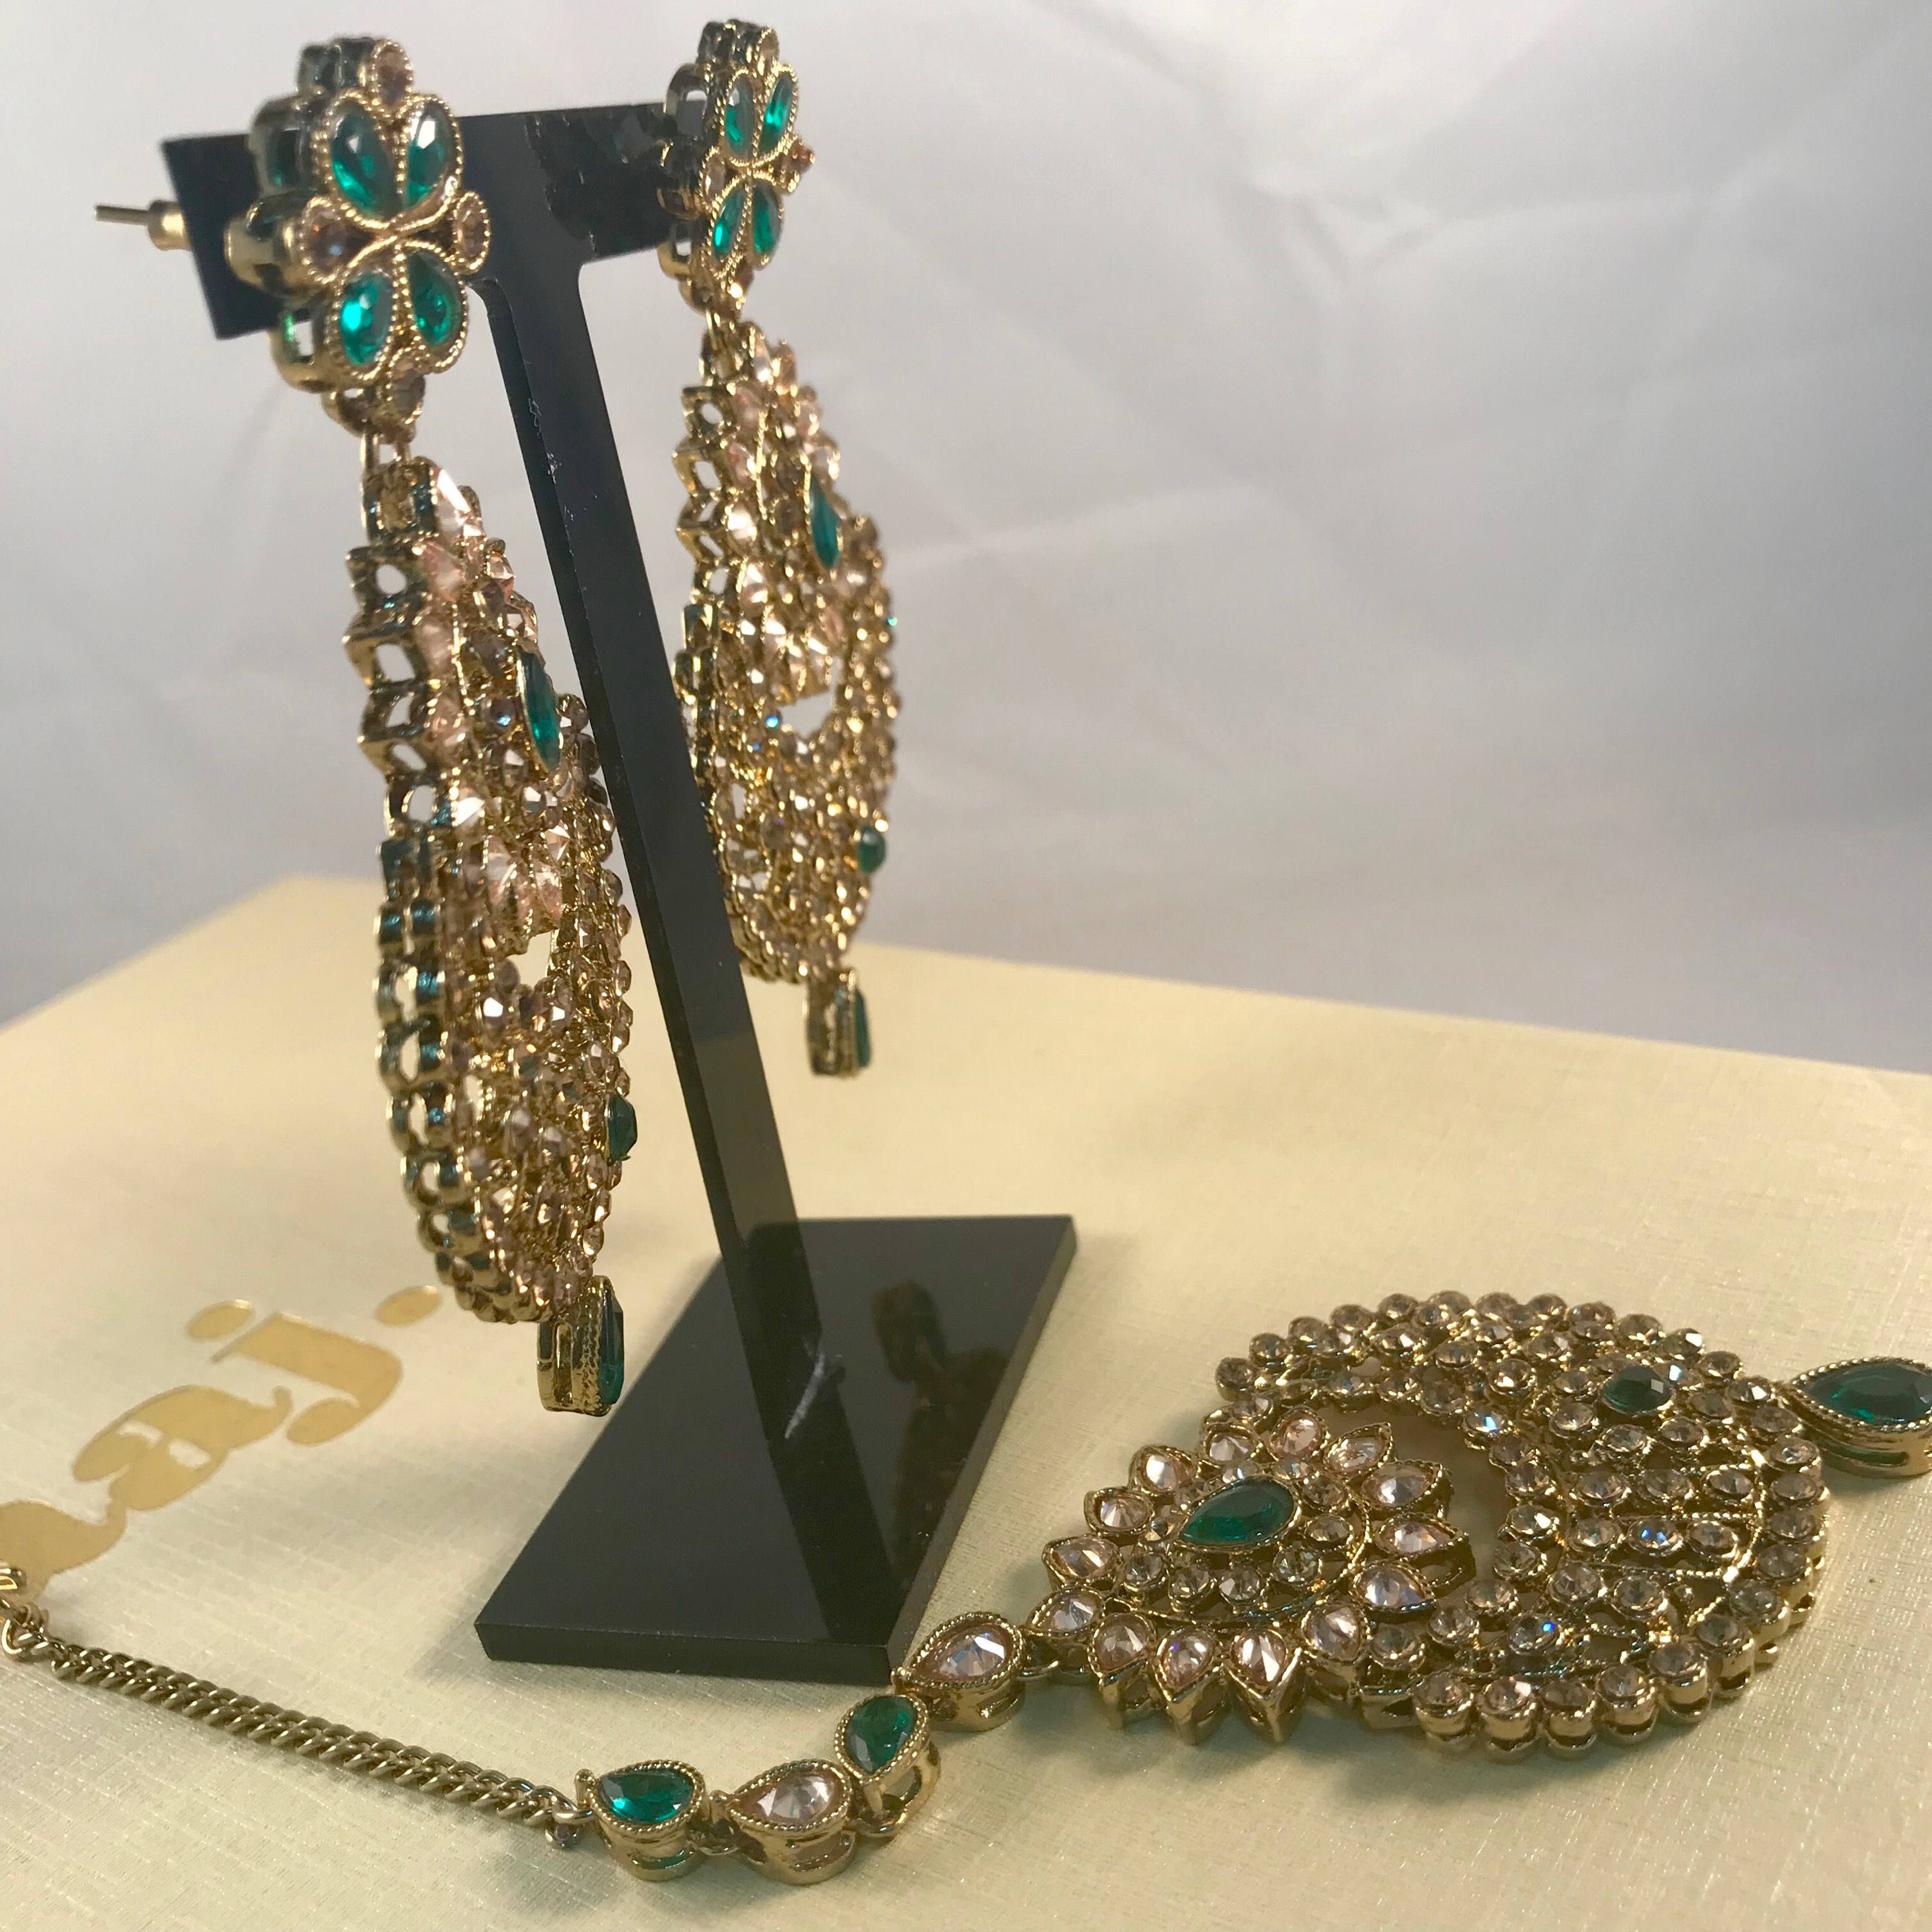 Baliye Antique gold & green earrings and tikka set